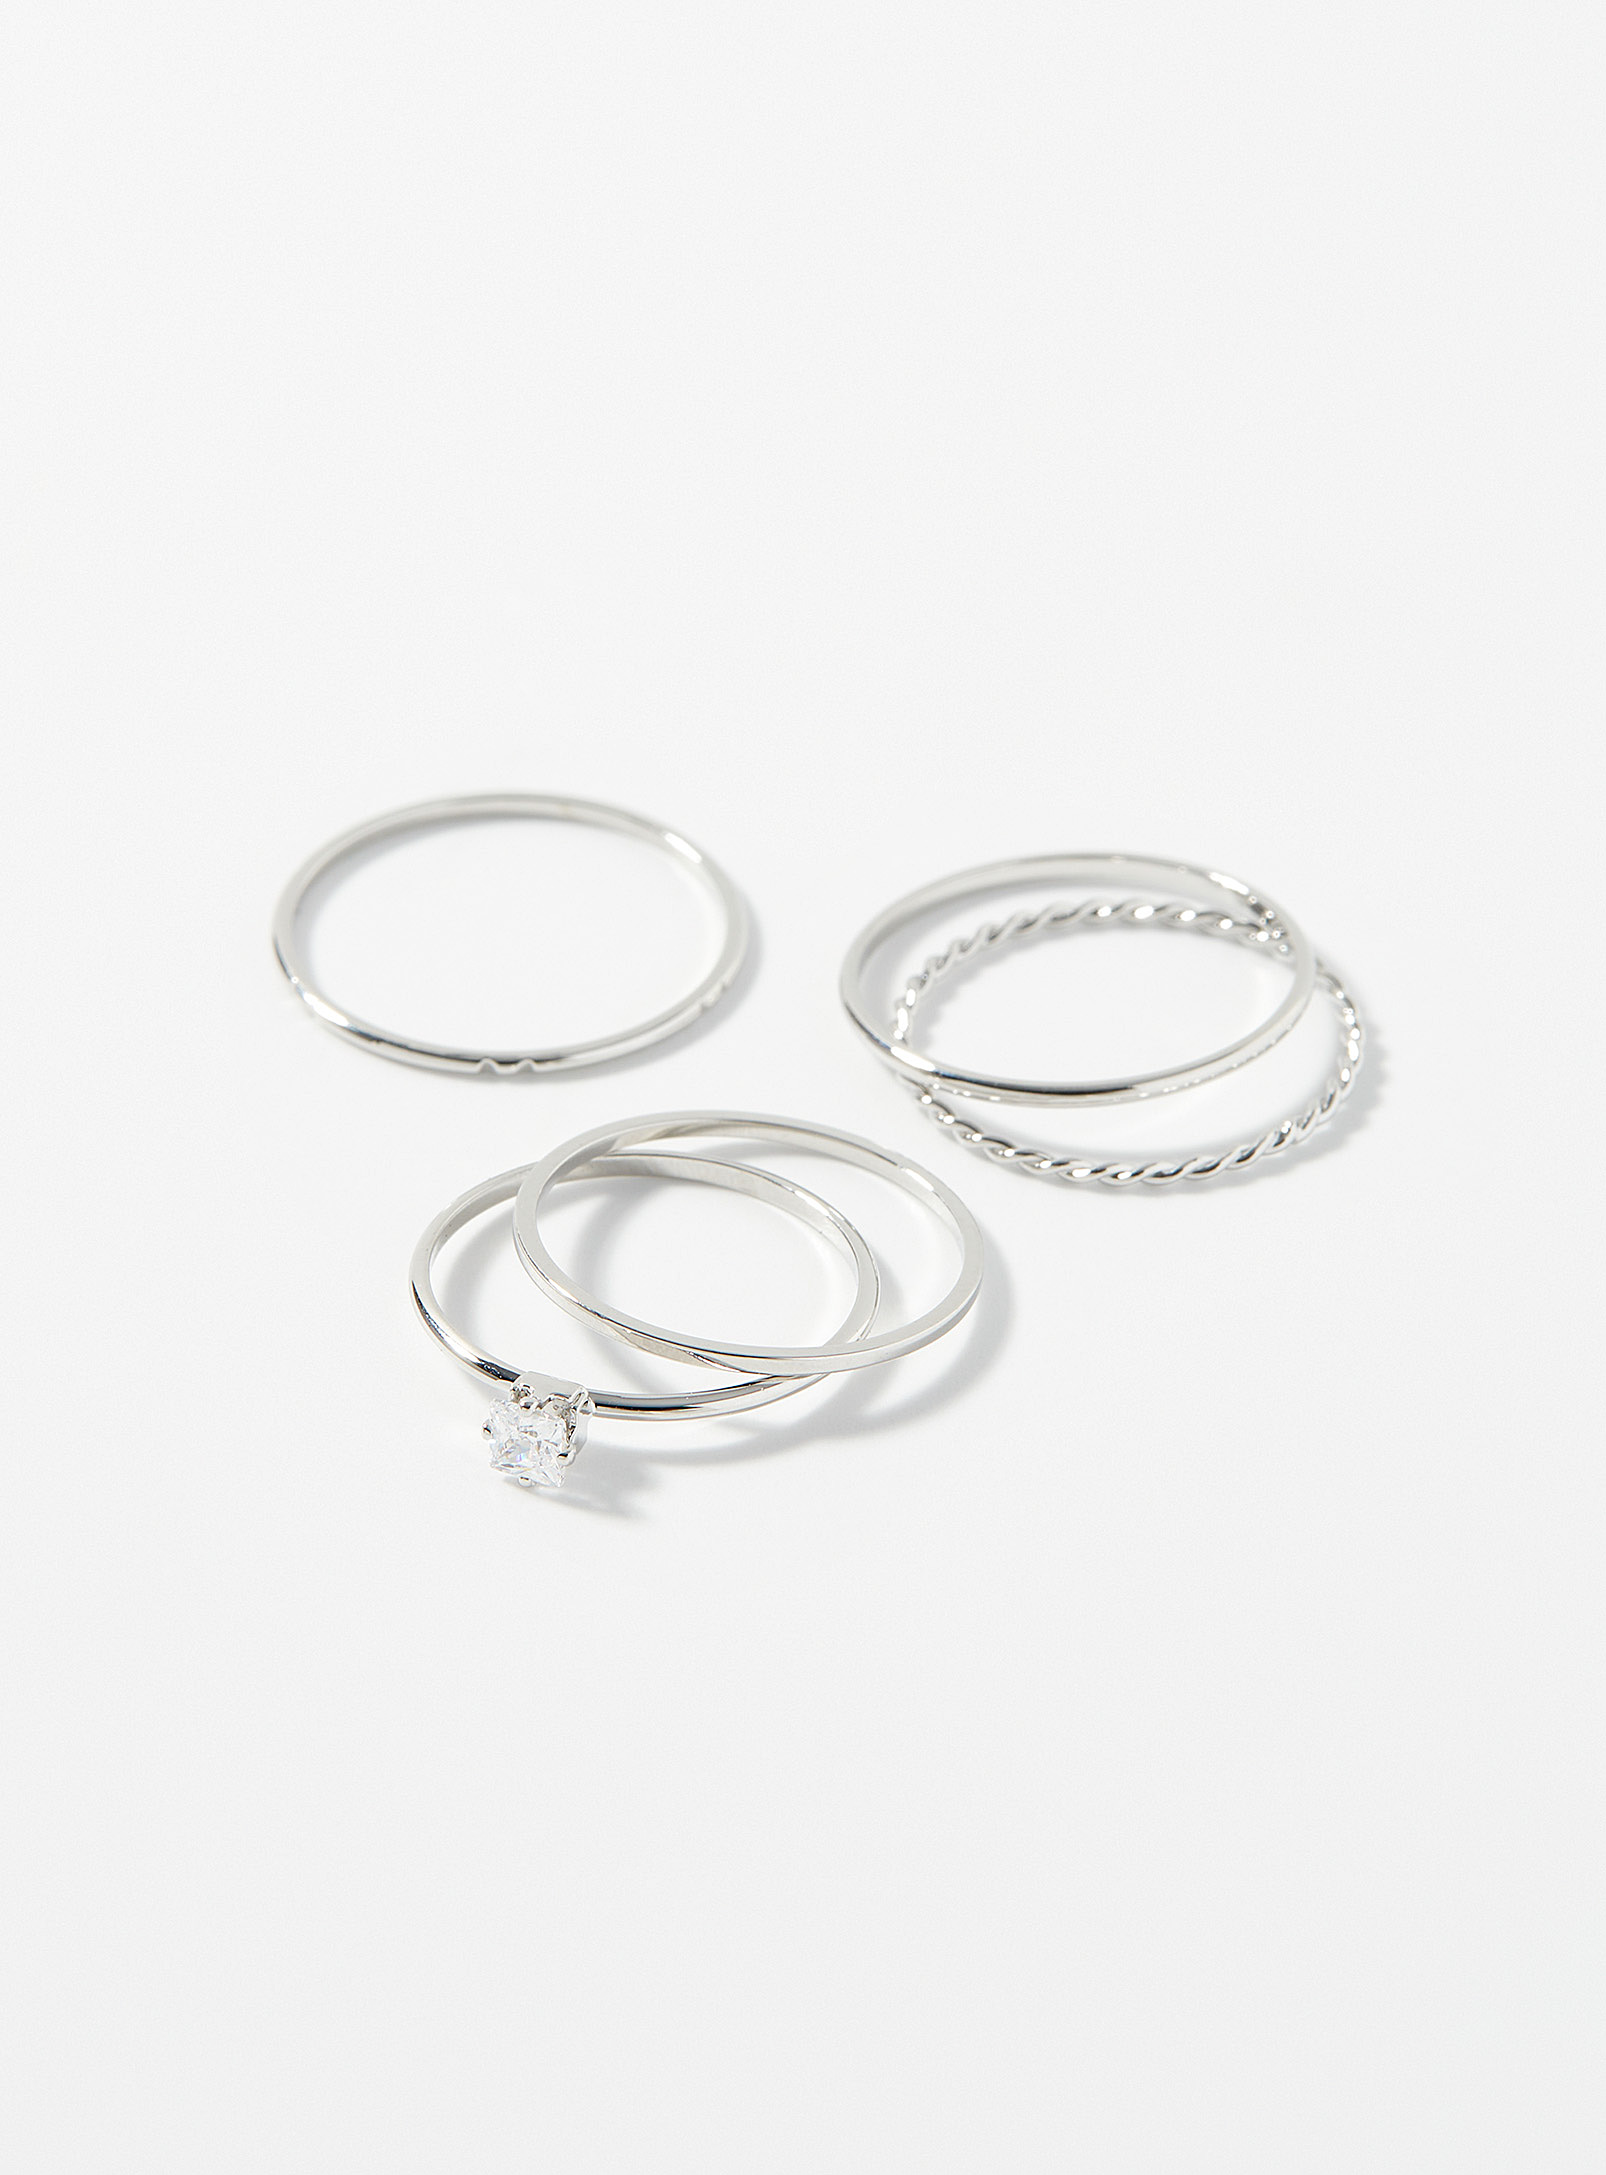 Simons - Women's Simplicity rings Set of 5